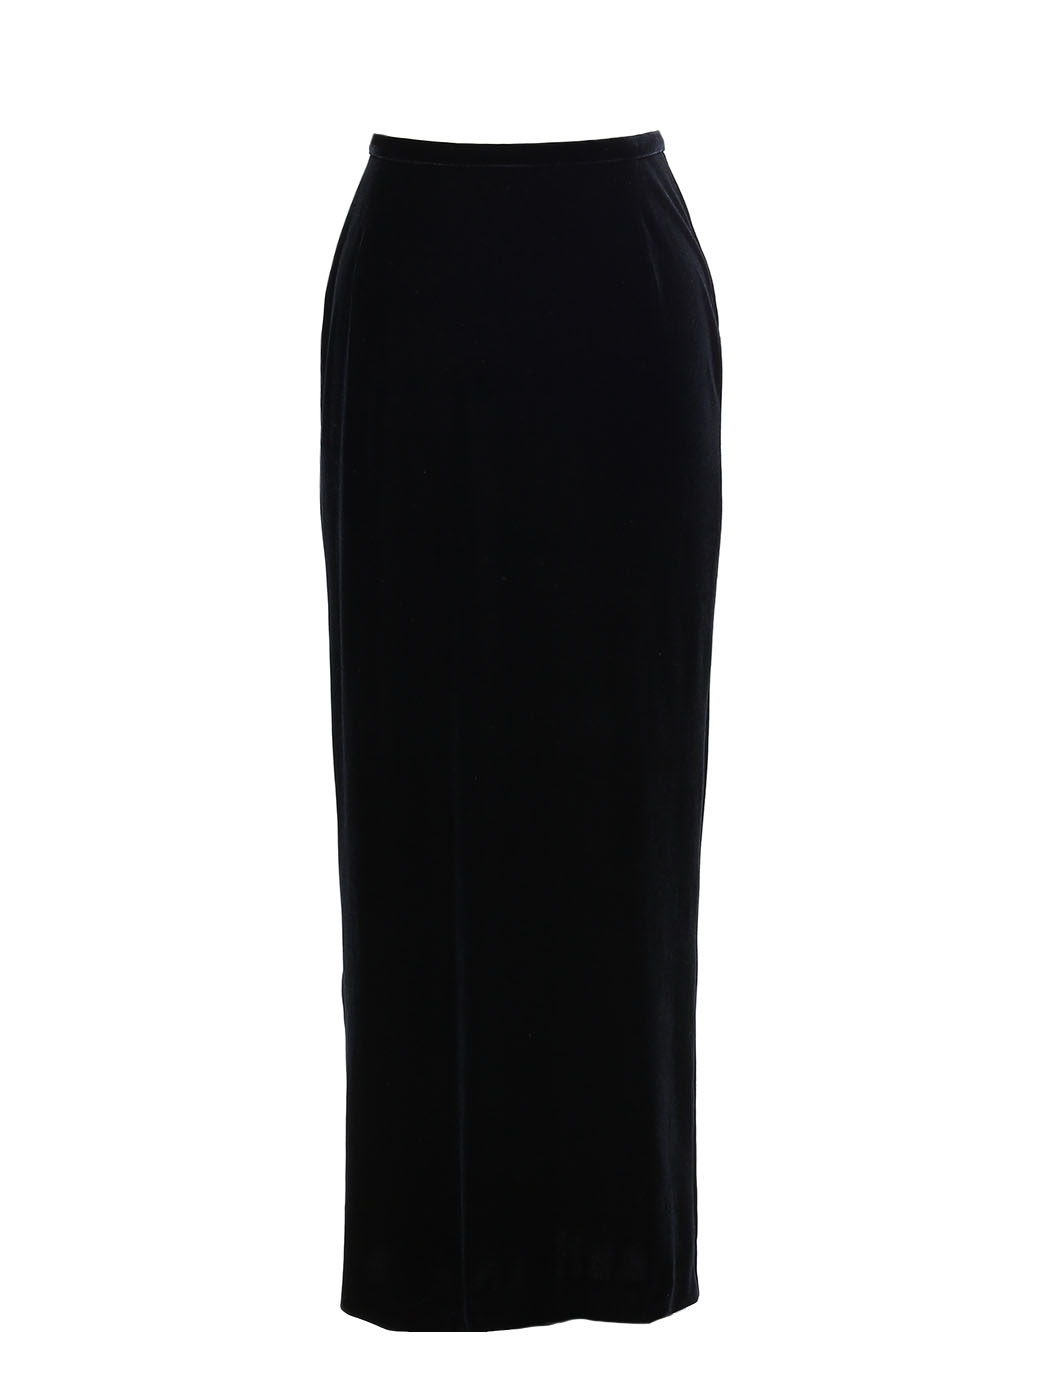 Dolce & Gabbana Stretch-jersey Midi Skirt in Black Womens Clothing Skirts Mid-length skirts 